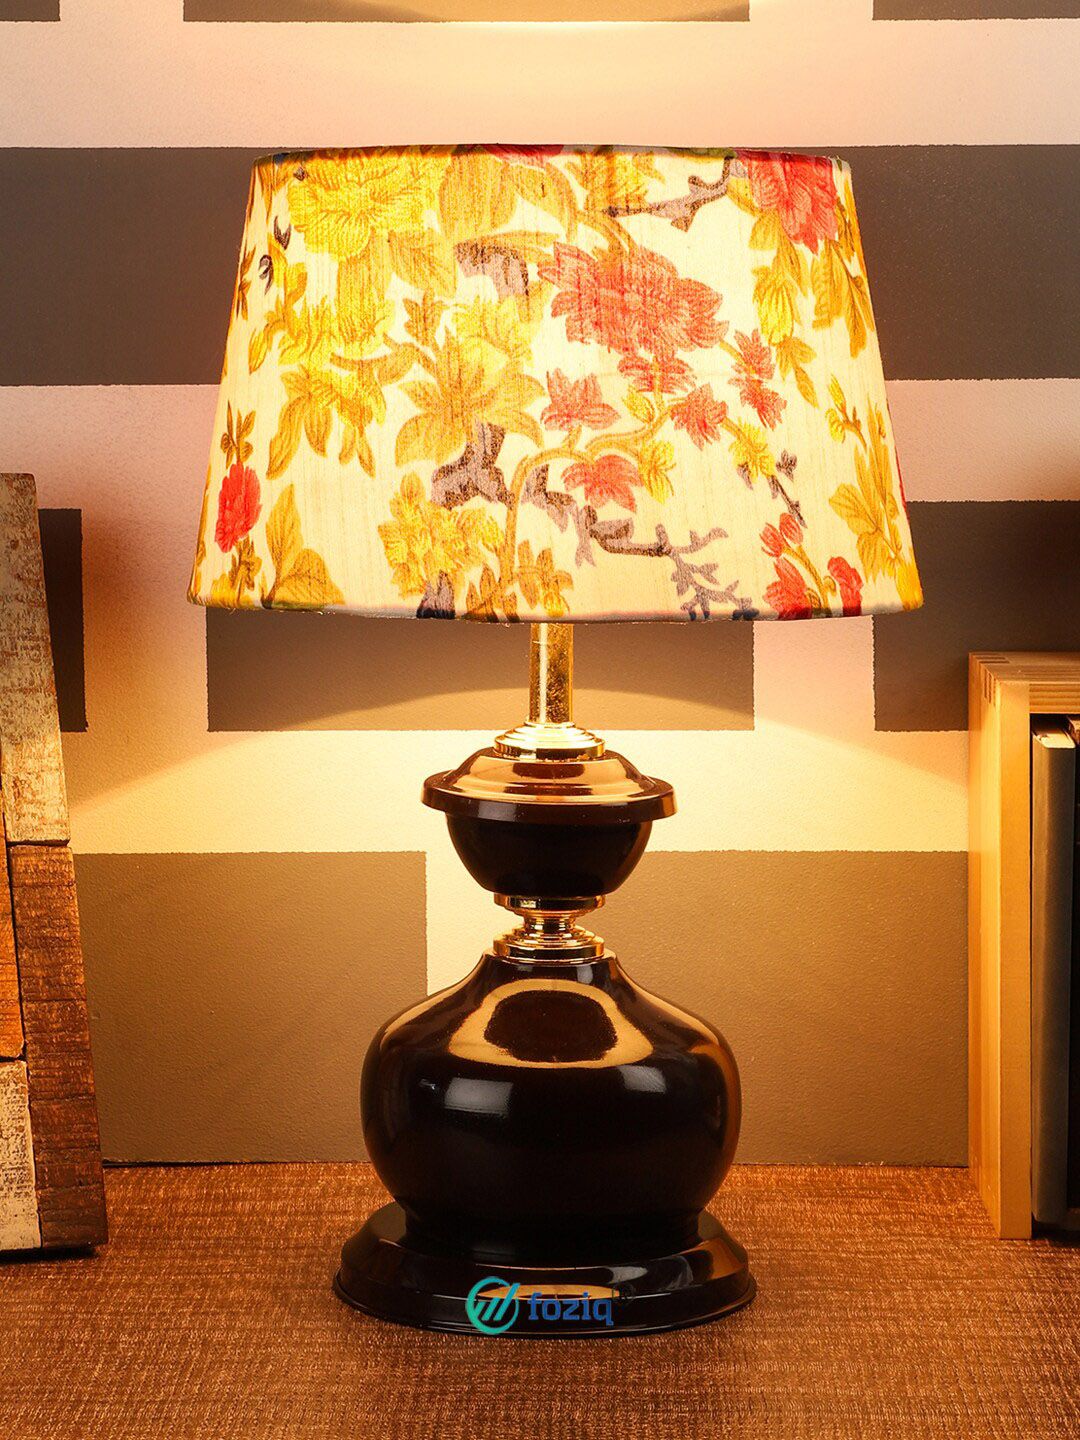 foziq Brown & White Printed Table Lamp Price in India